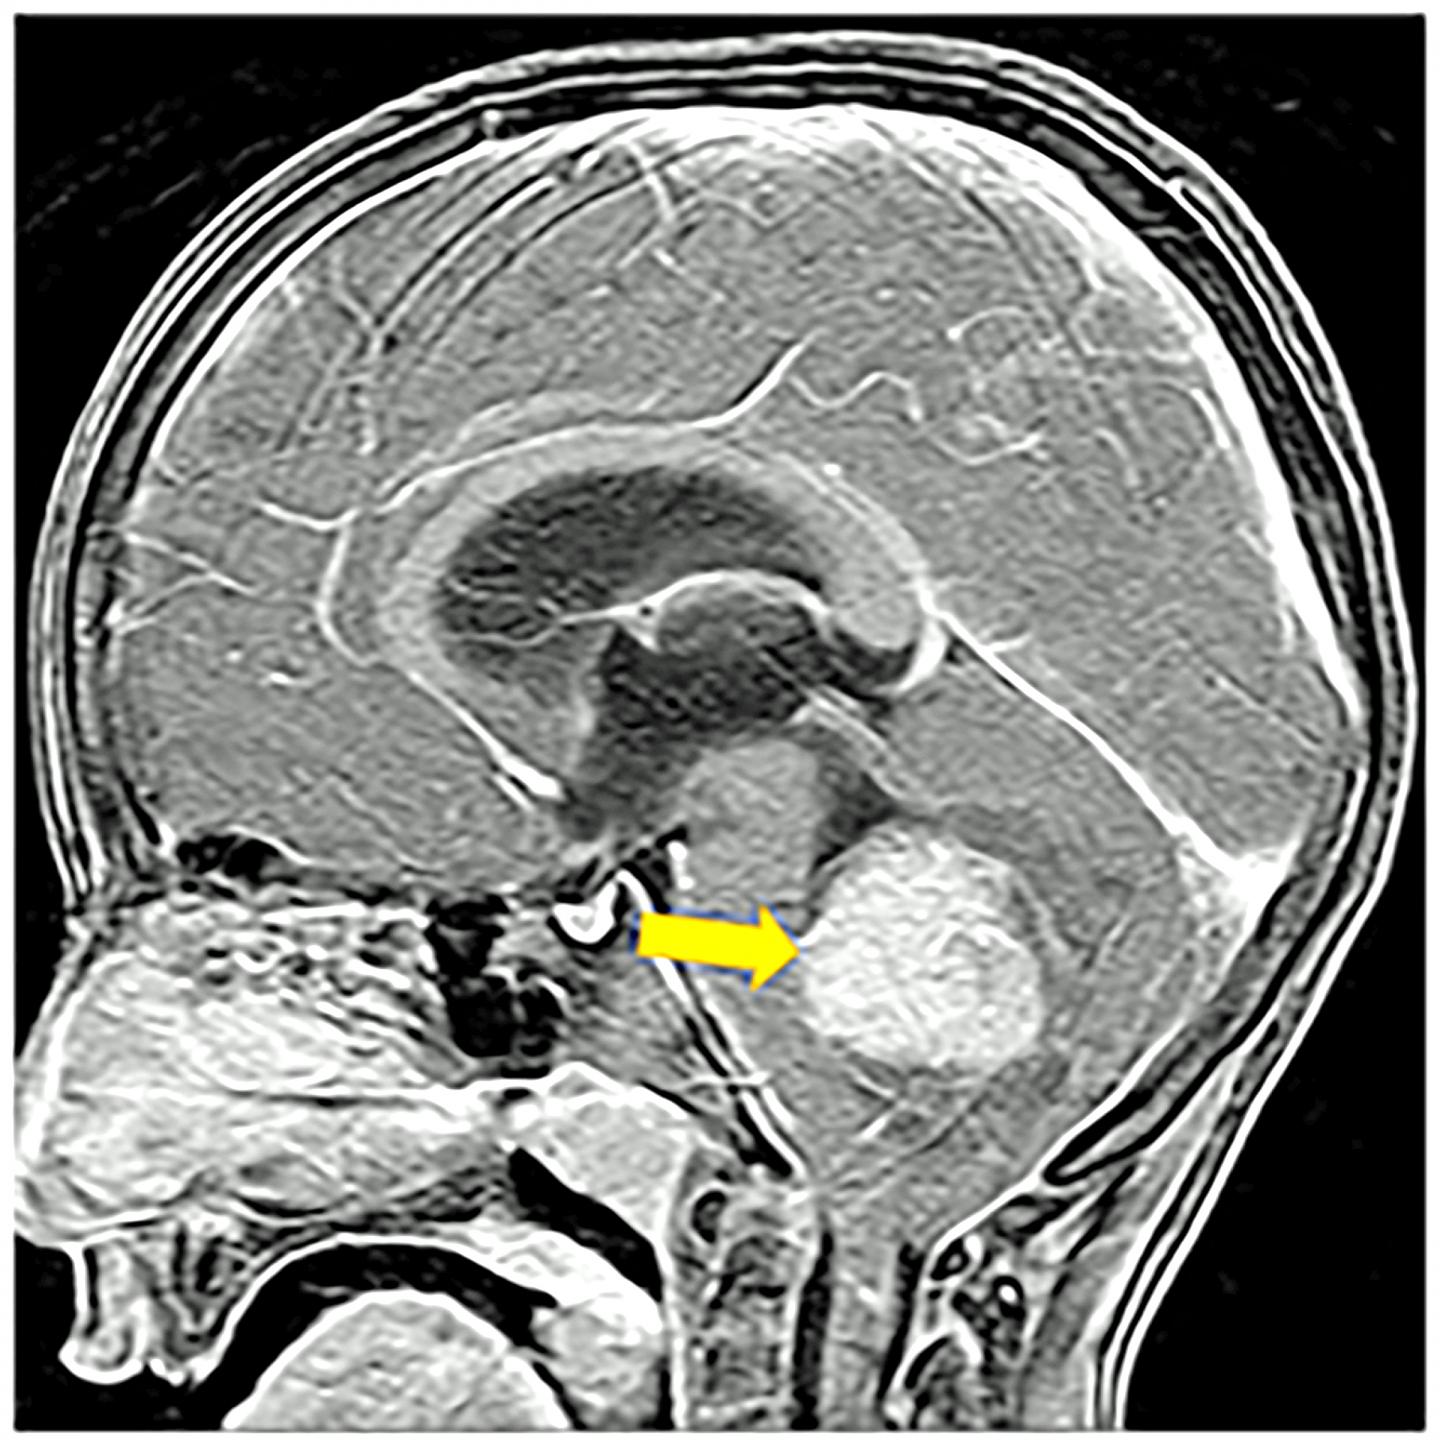 brain mri scan tumor